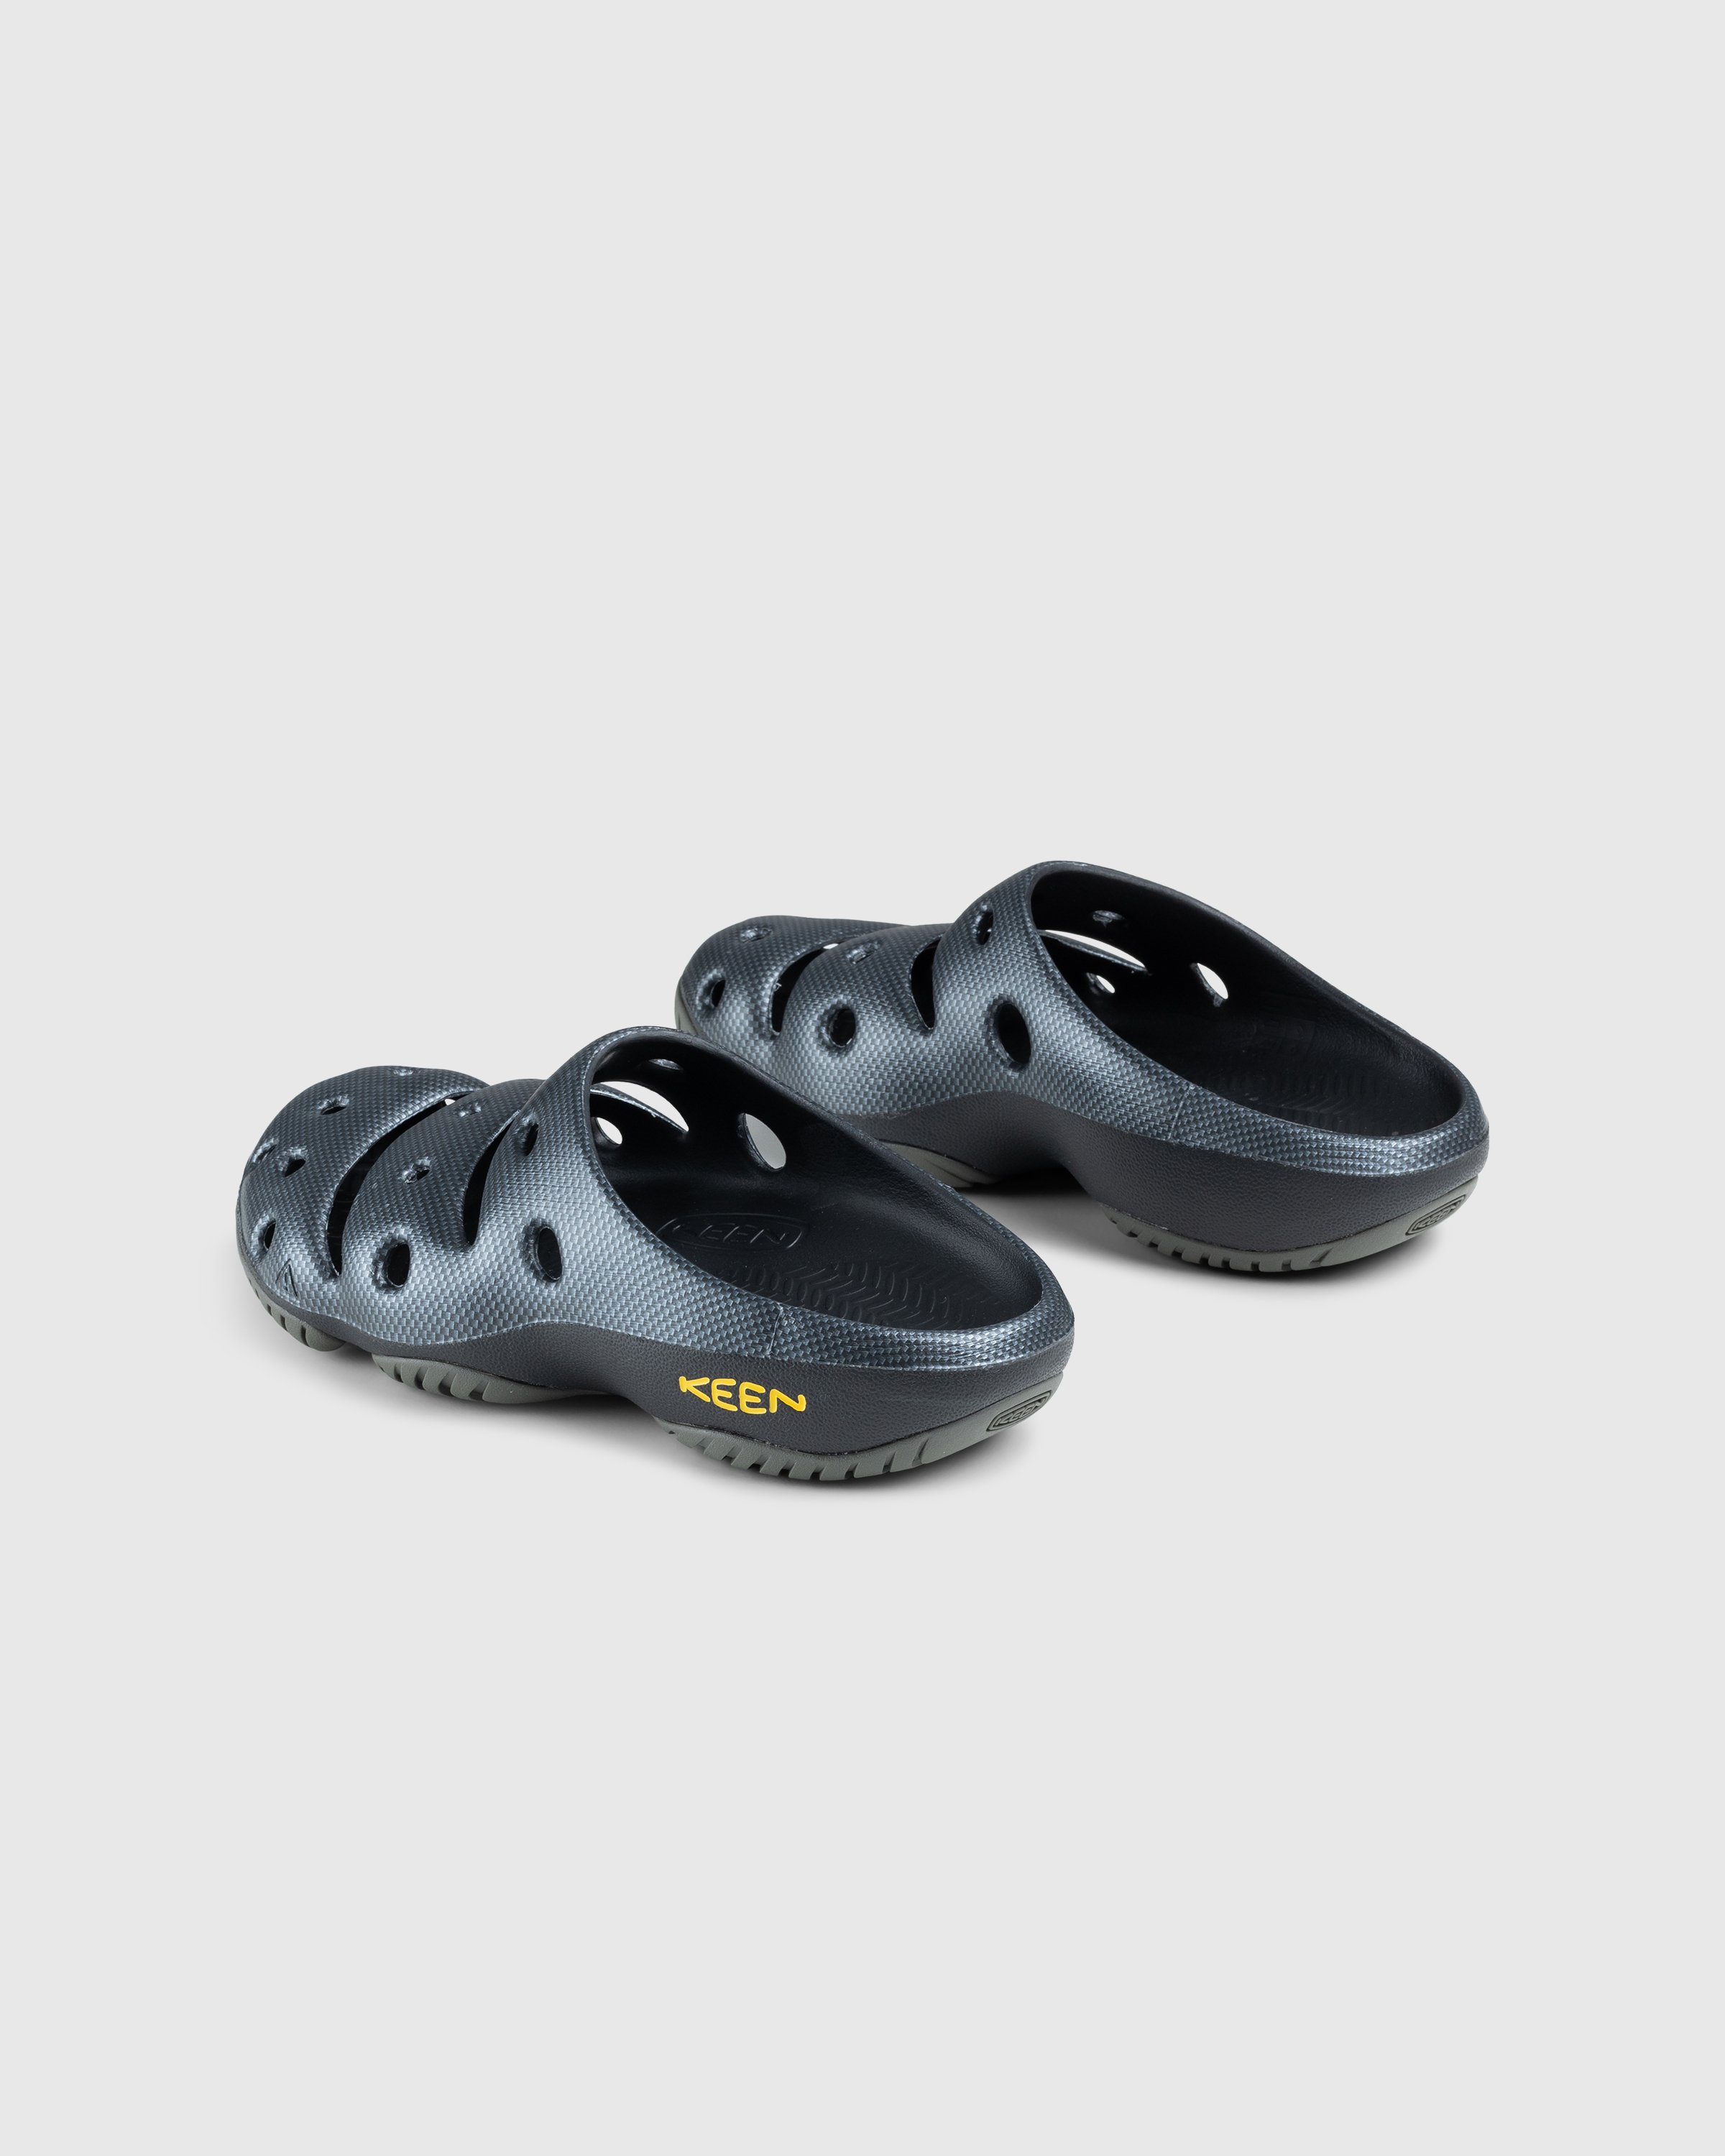 Keen - Yogui Arts Graphite - Footwear - Grey - Image 4